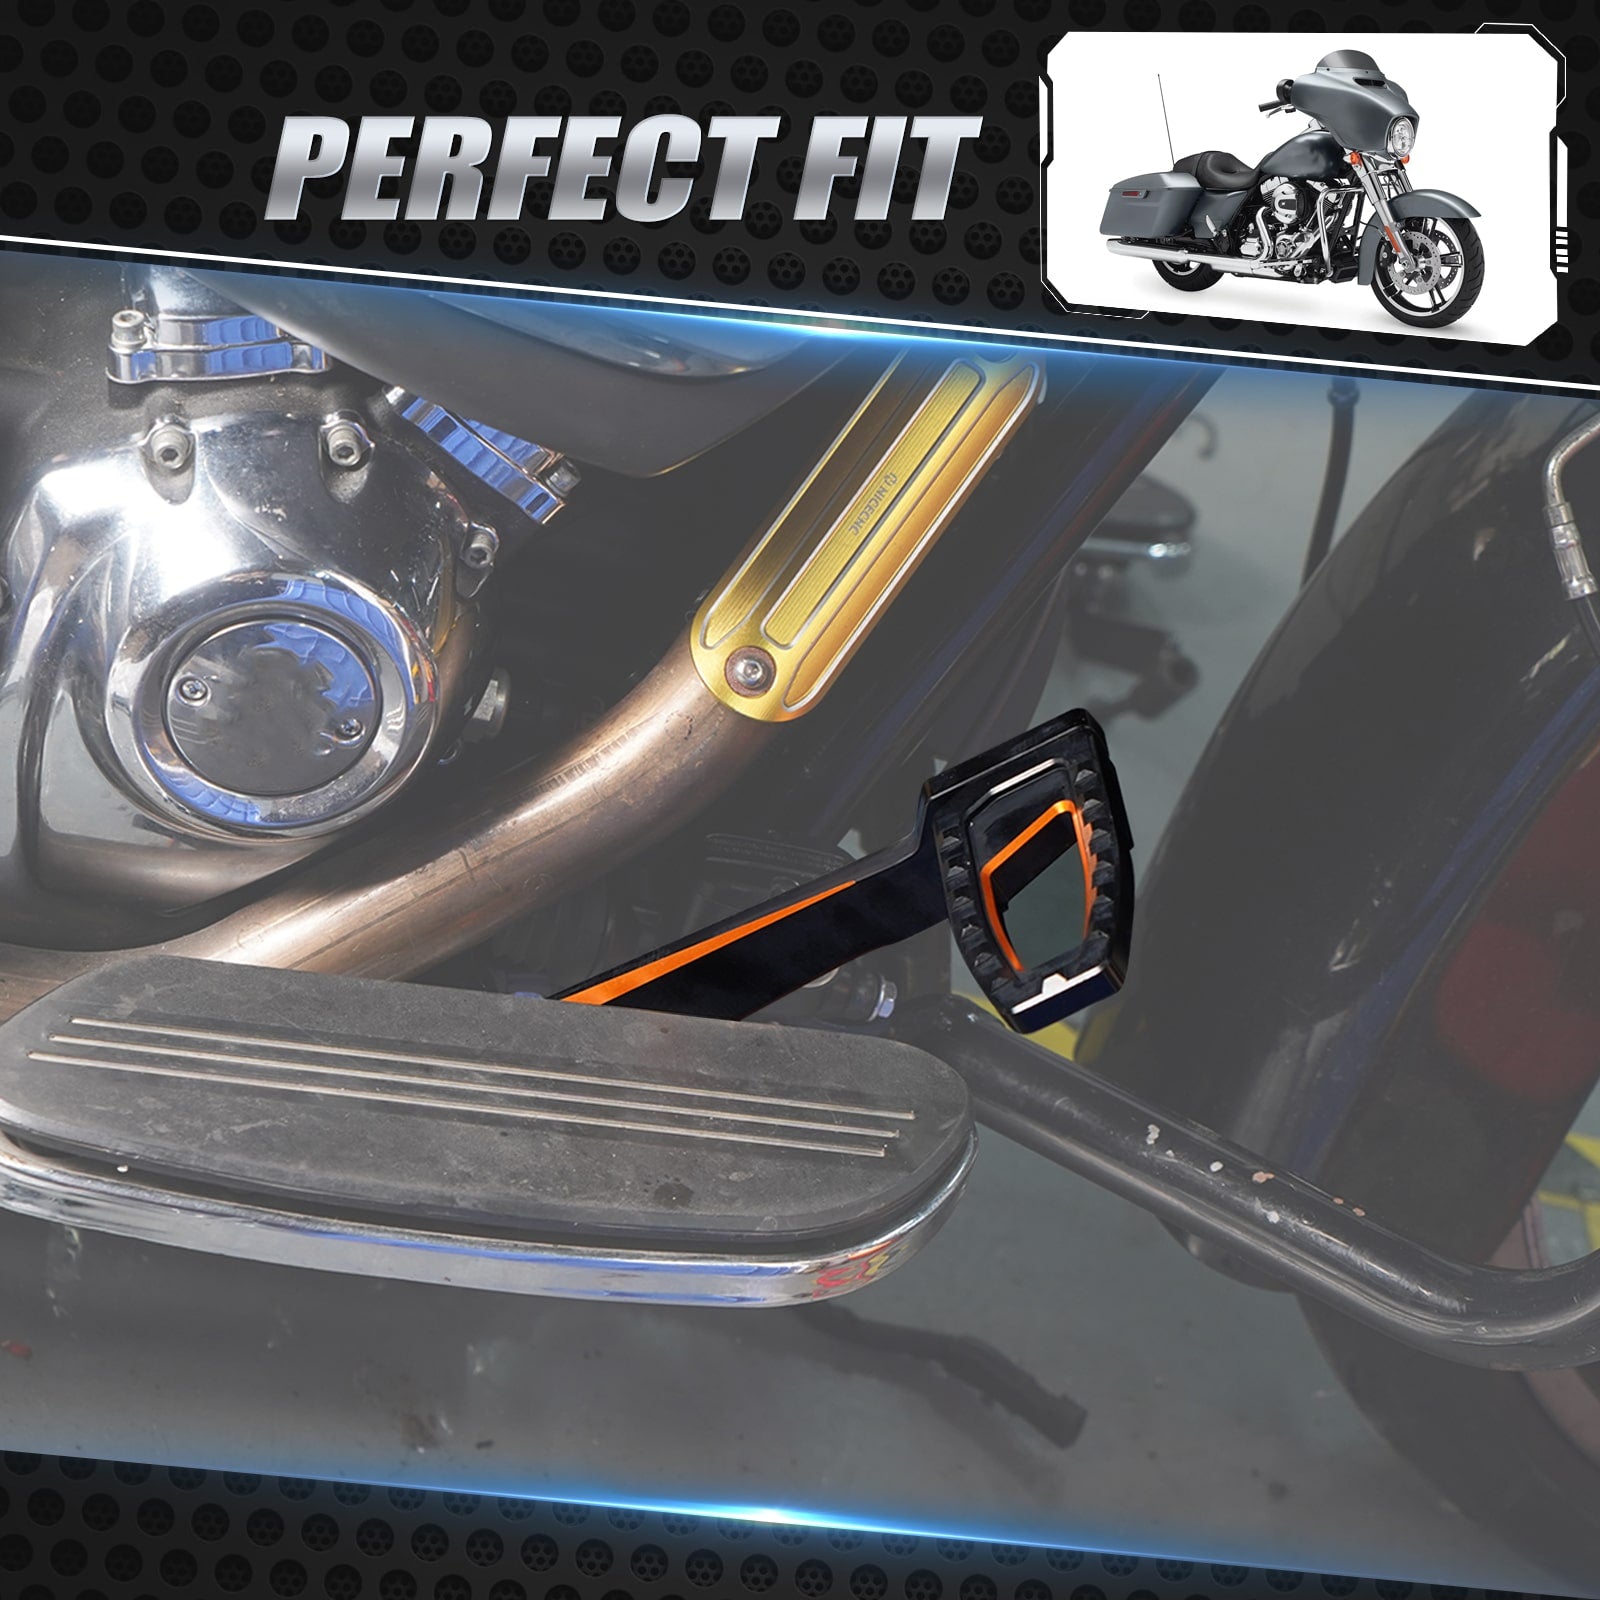 Rear Brake Lever Pedal Kit For Harley-Davidson Touring & Trike Models